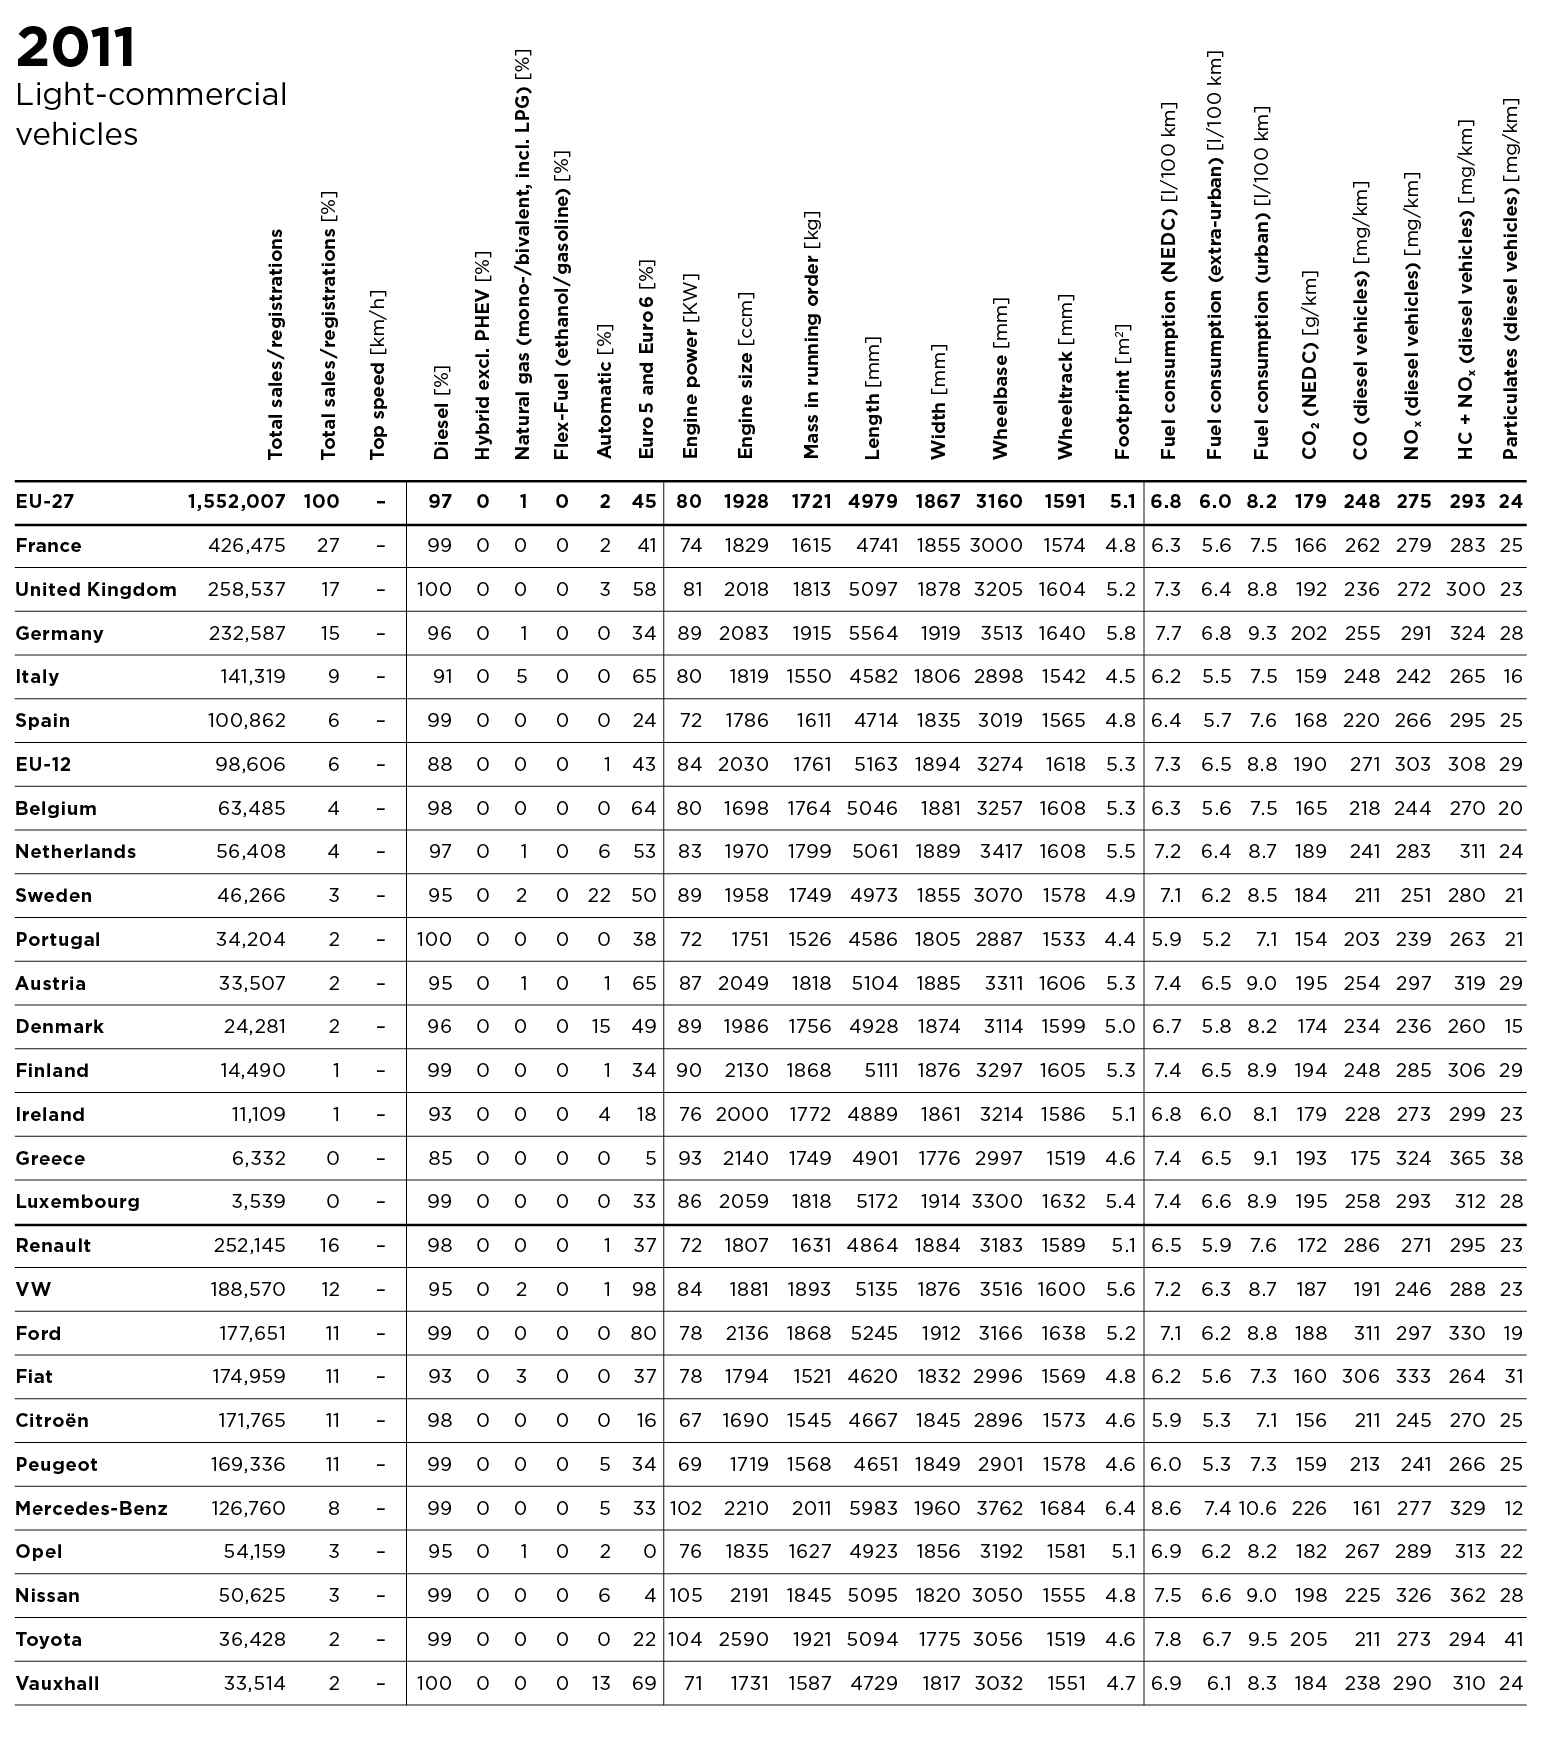 LCV 2011 data